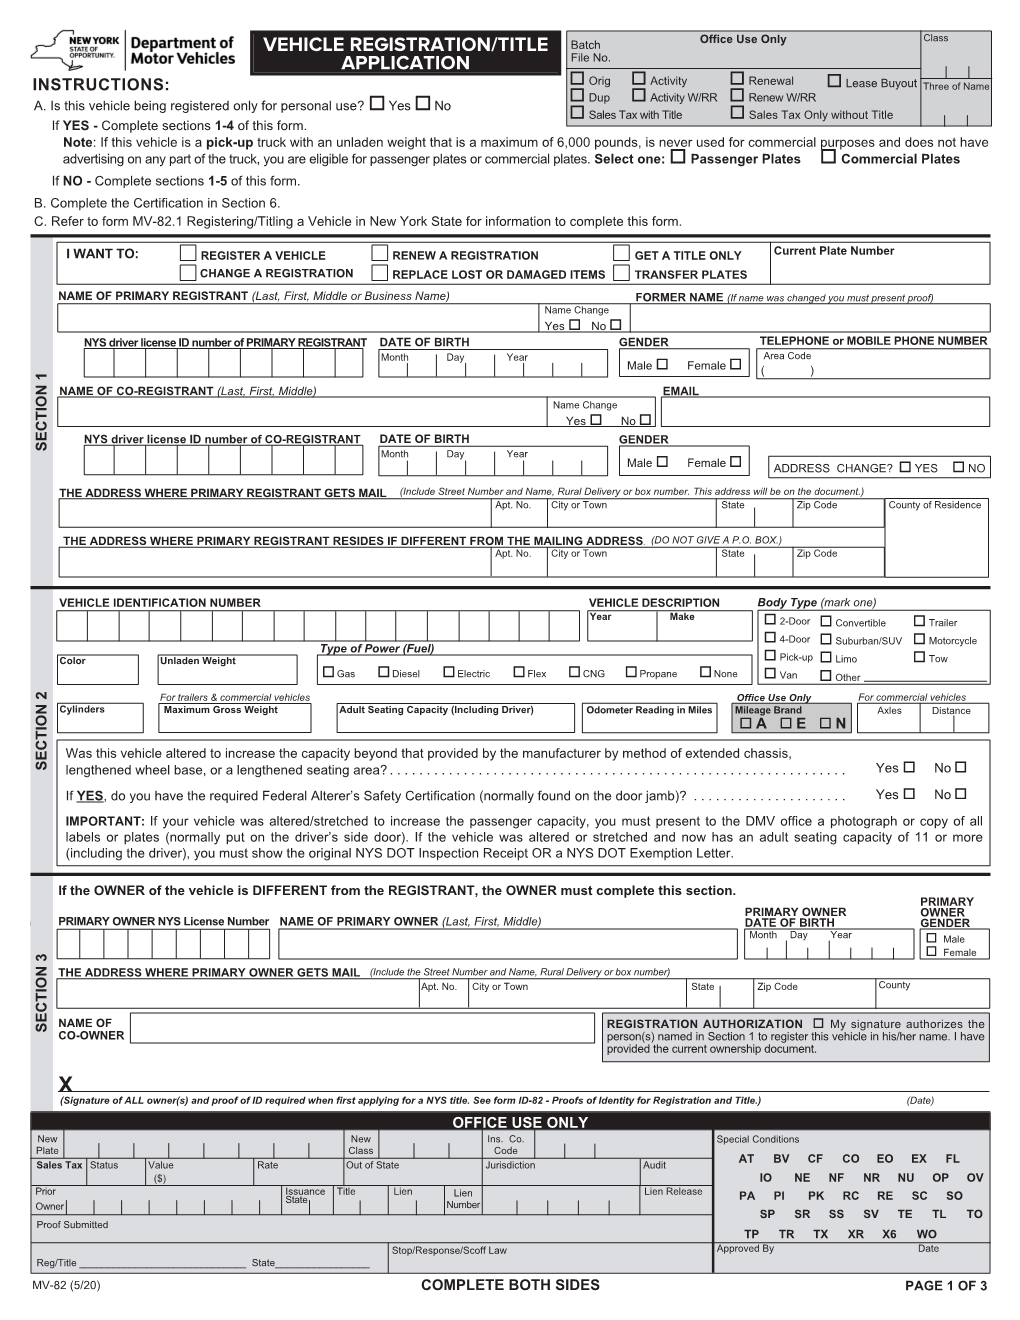 Vehicle Registration/Title Application